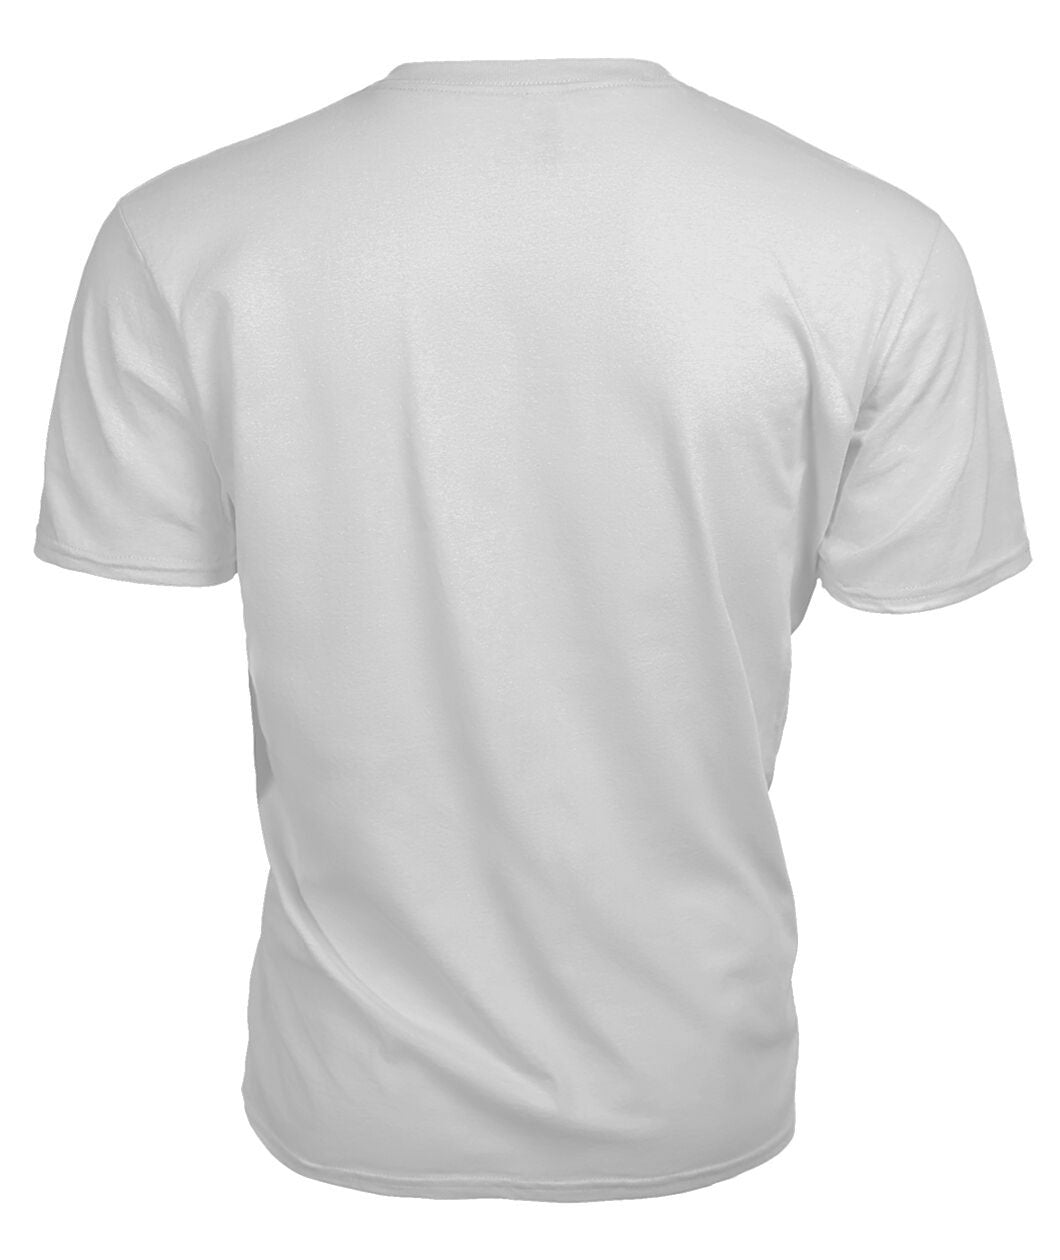 Scott Black & White Modern Tartan Crest 2D T-shirt - Blood Runs Through My Veins Style